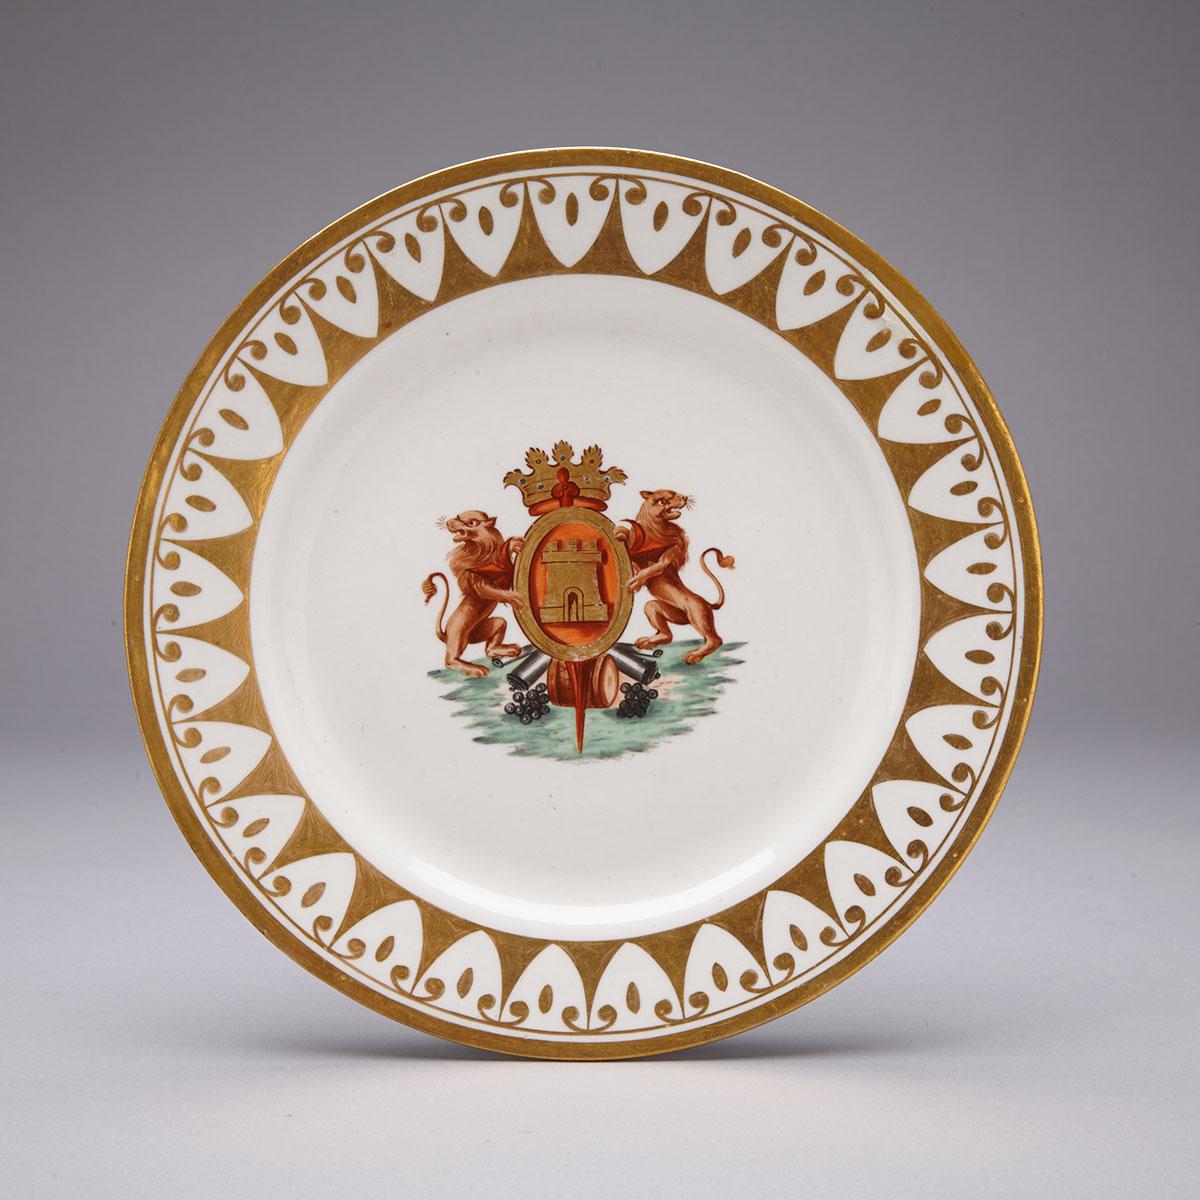 English Porcelain Armorial Plate, probably Coalport, c.1810